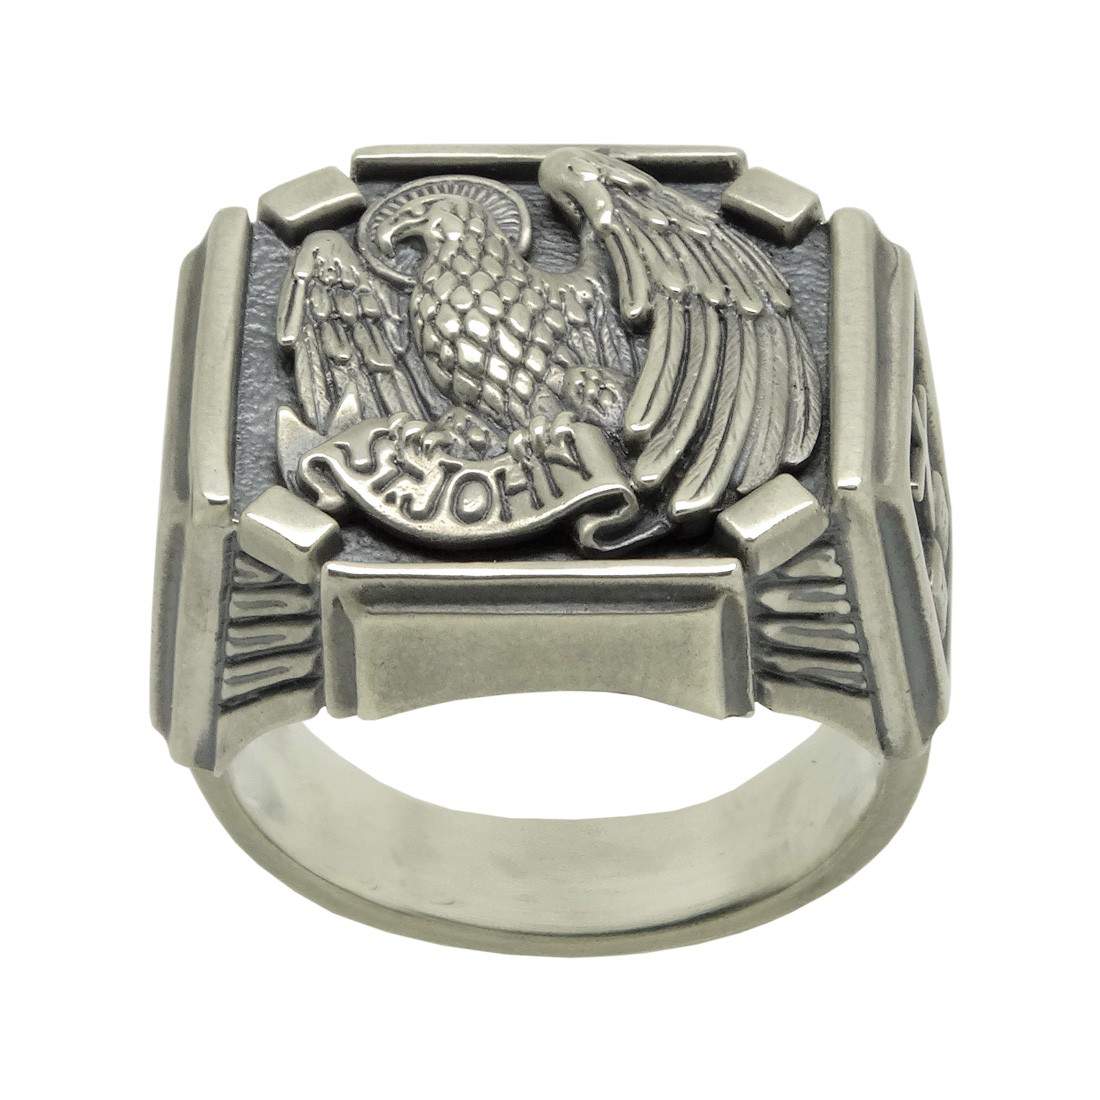 Saint John Handcrafted Sterling Silver 925 Custom Made Religious Men’s Ring